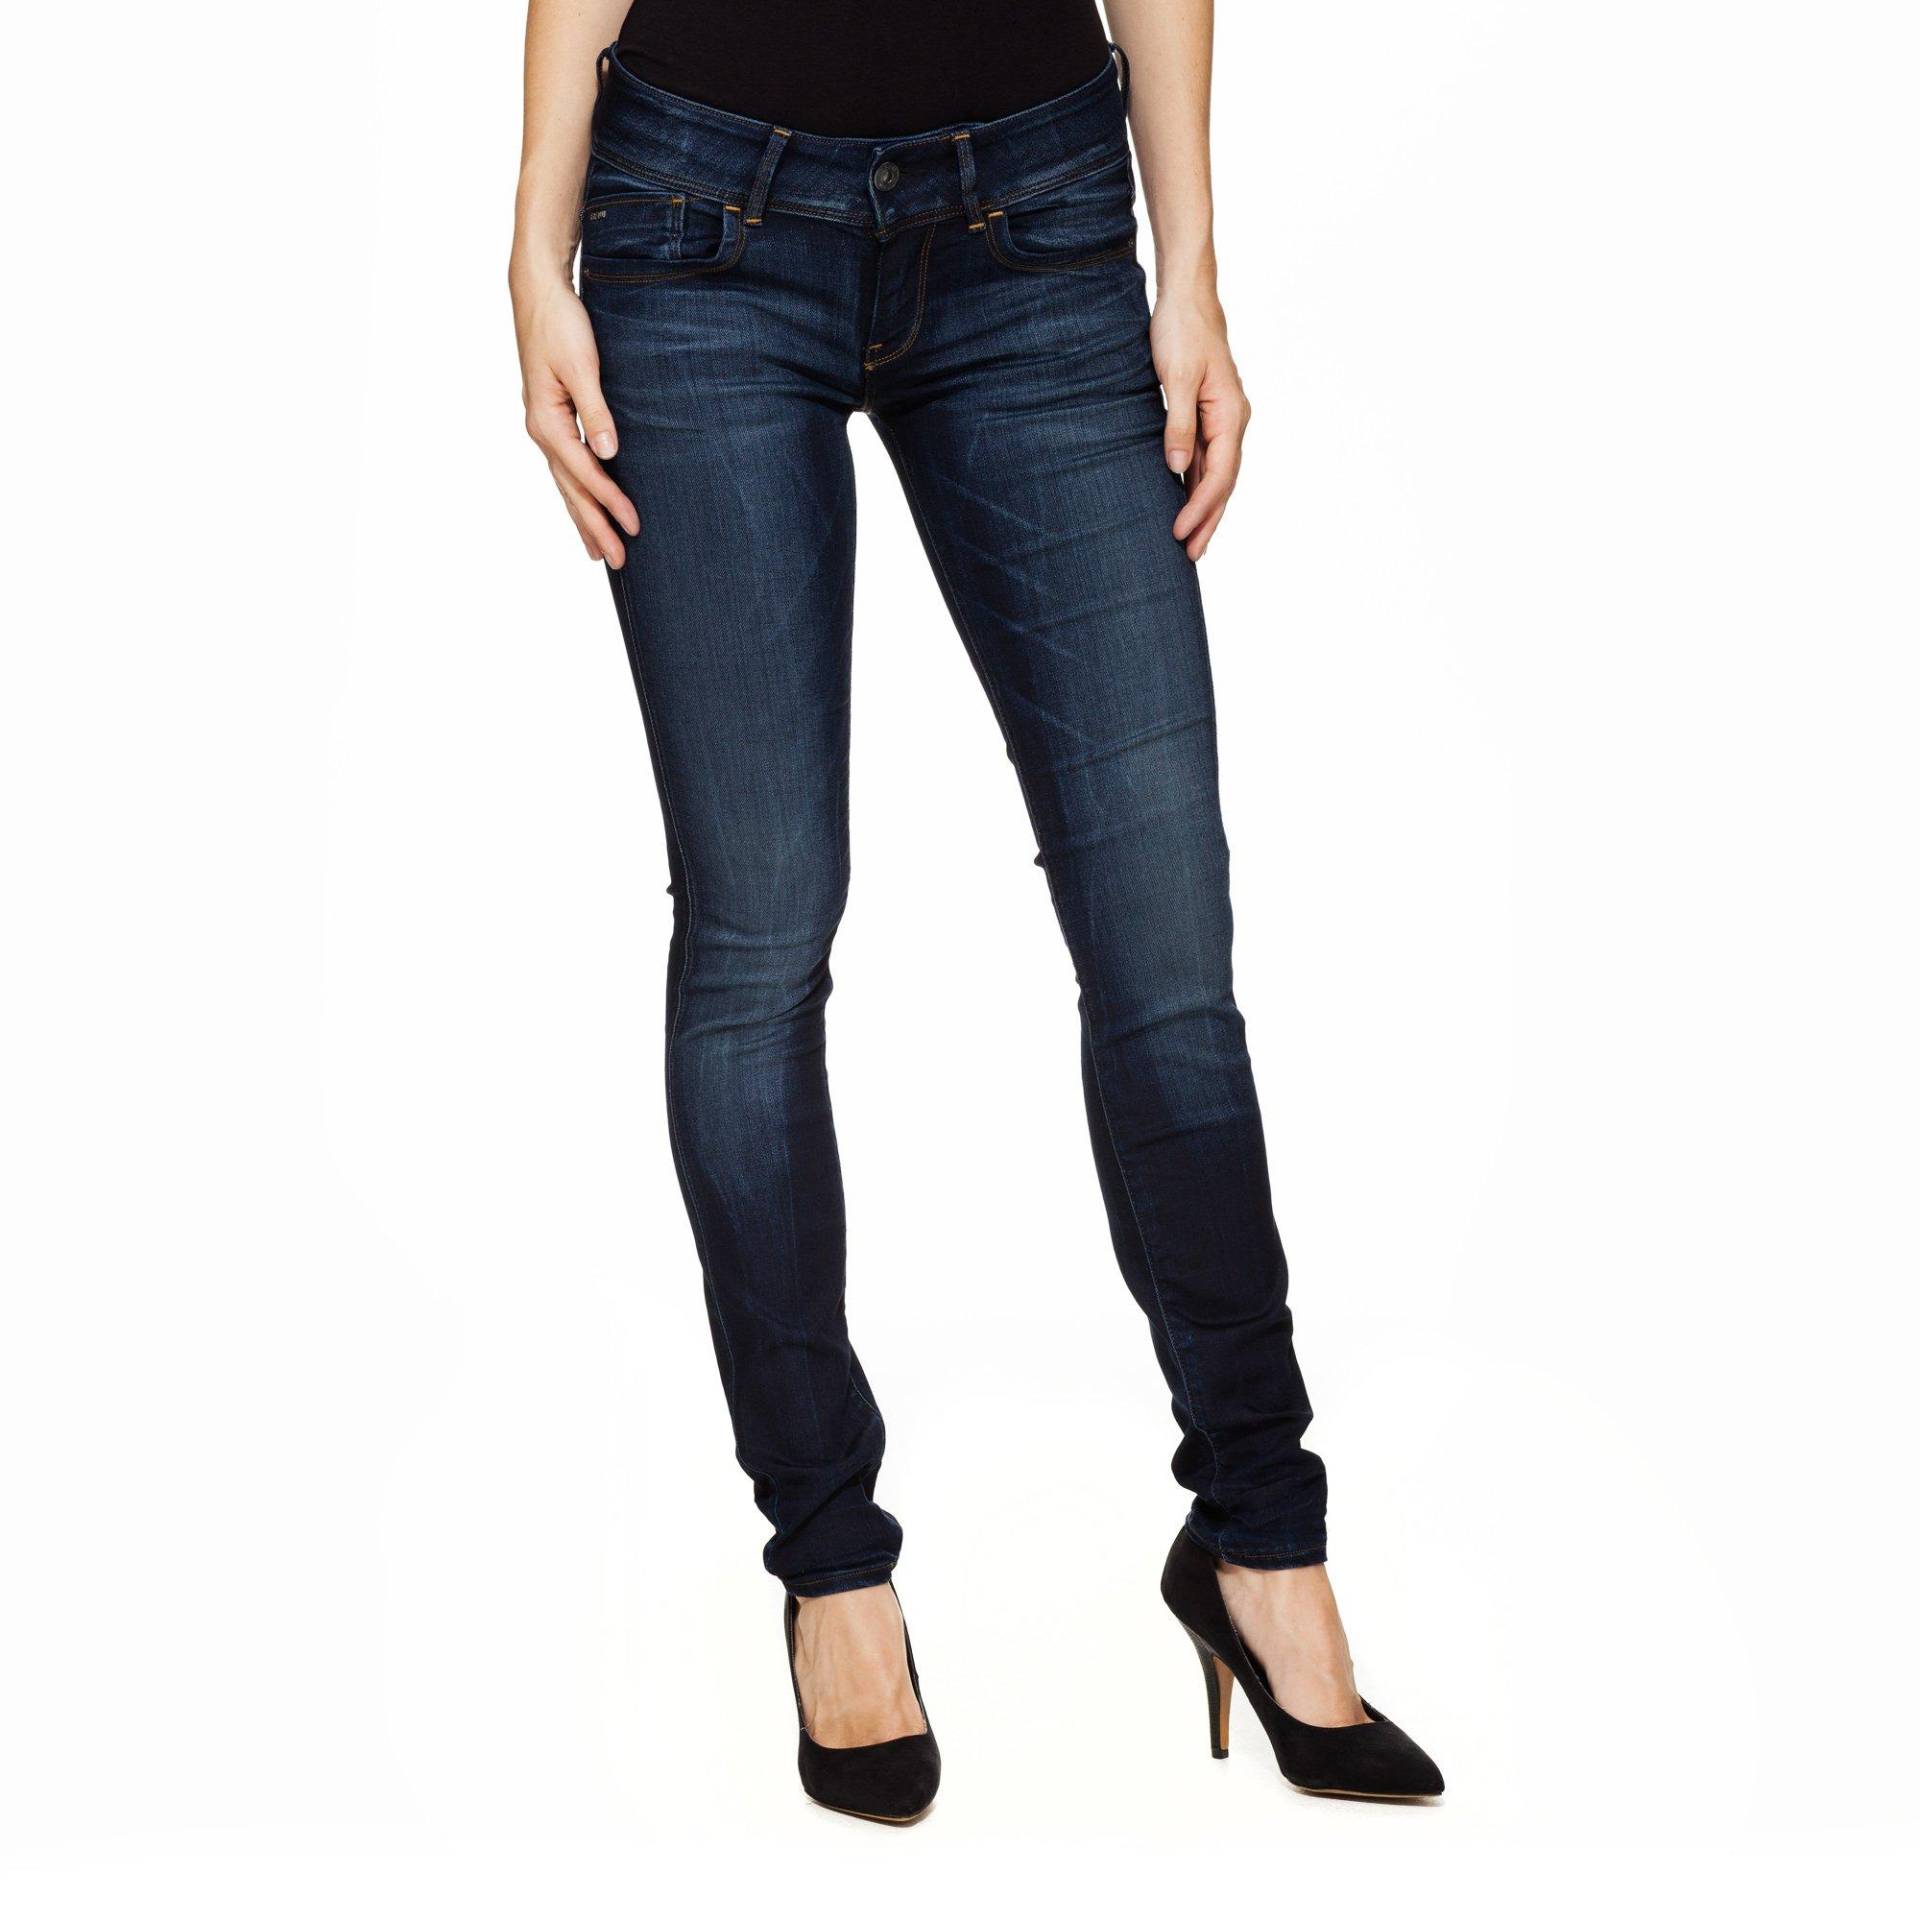 Jeans, Skinny Fit Damen Blau Denim W25 von G-STAR